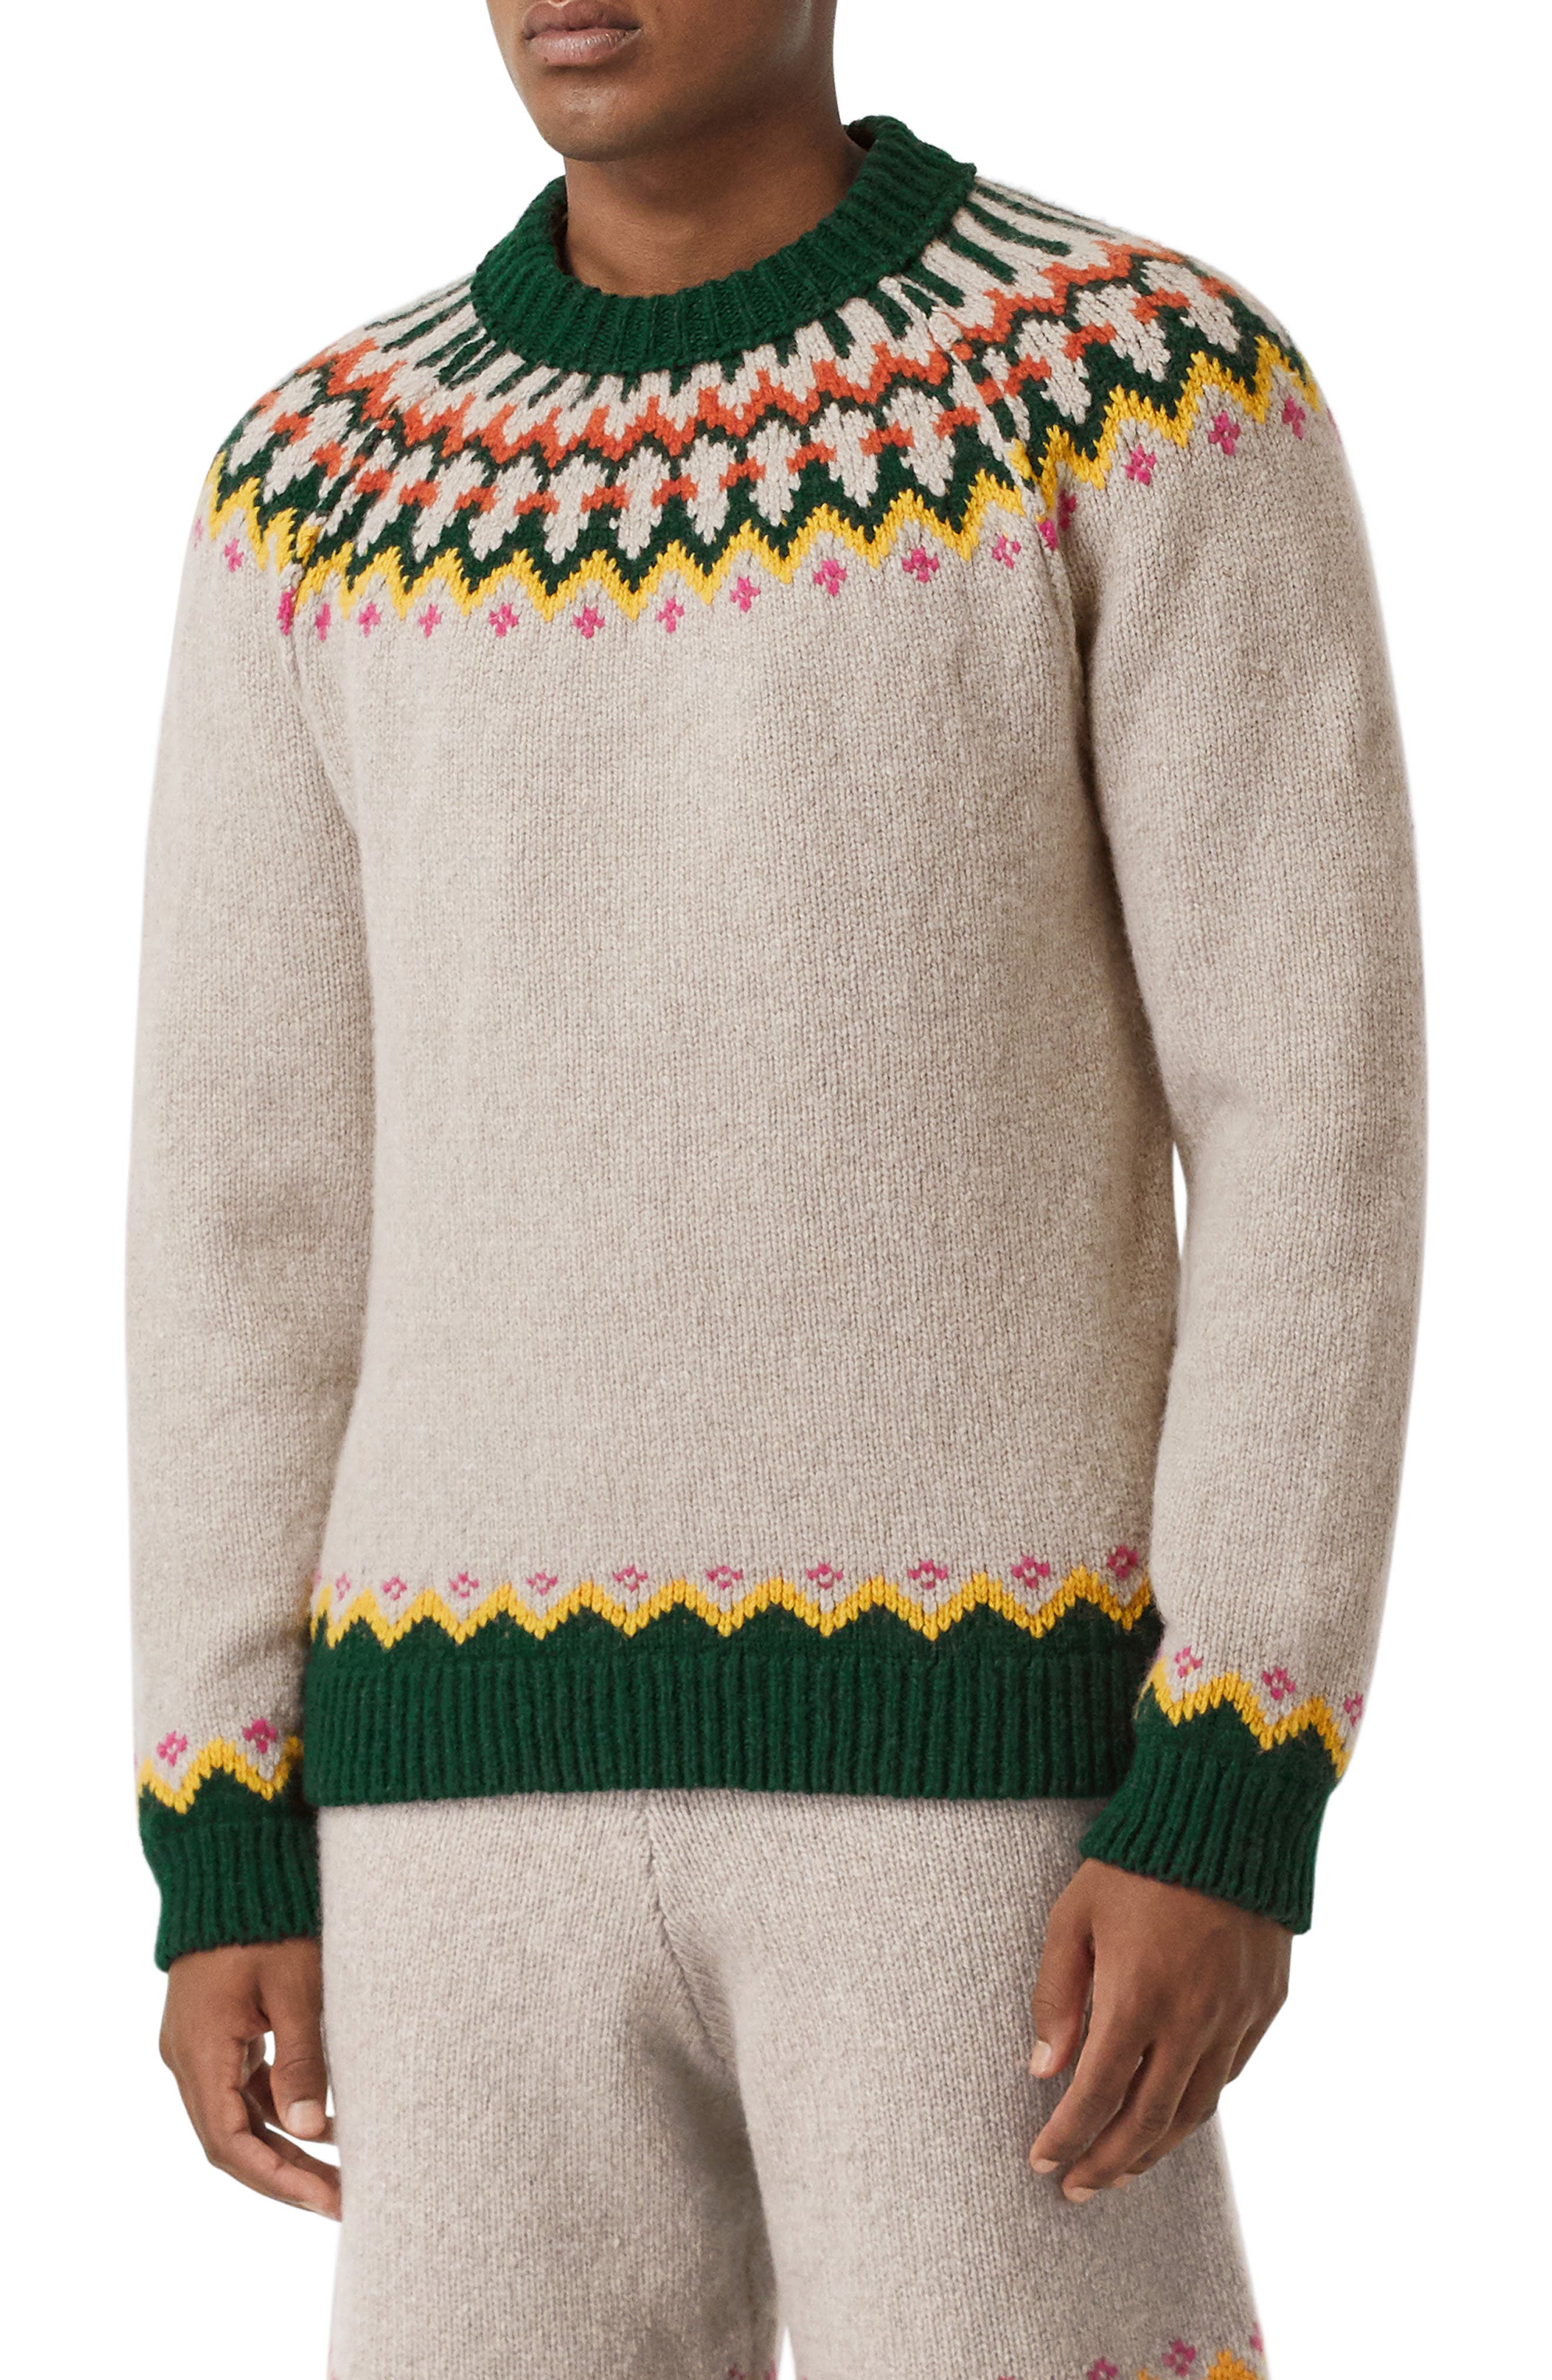 burberry sweater mens sale